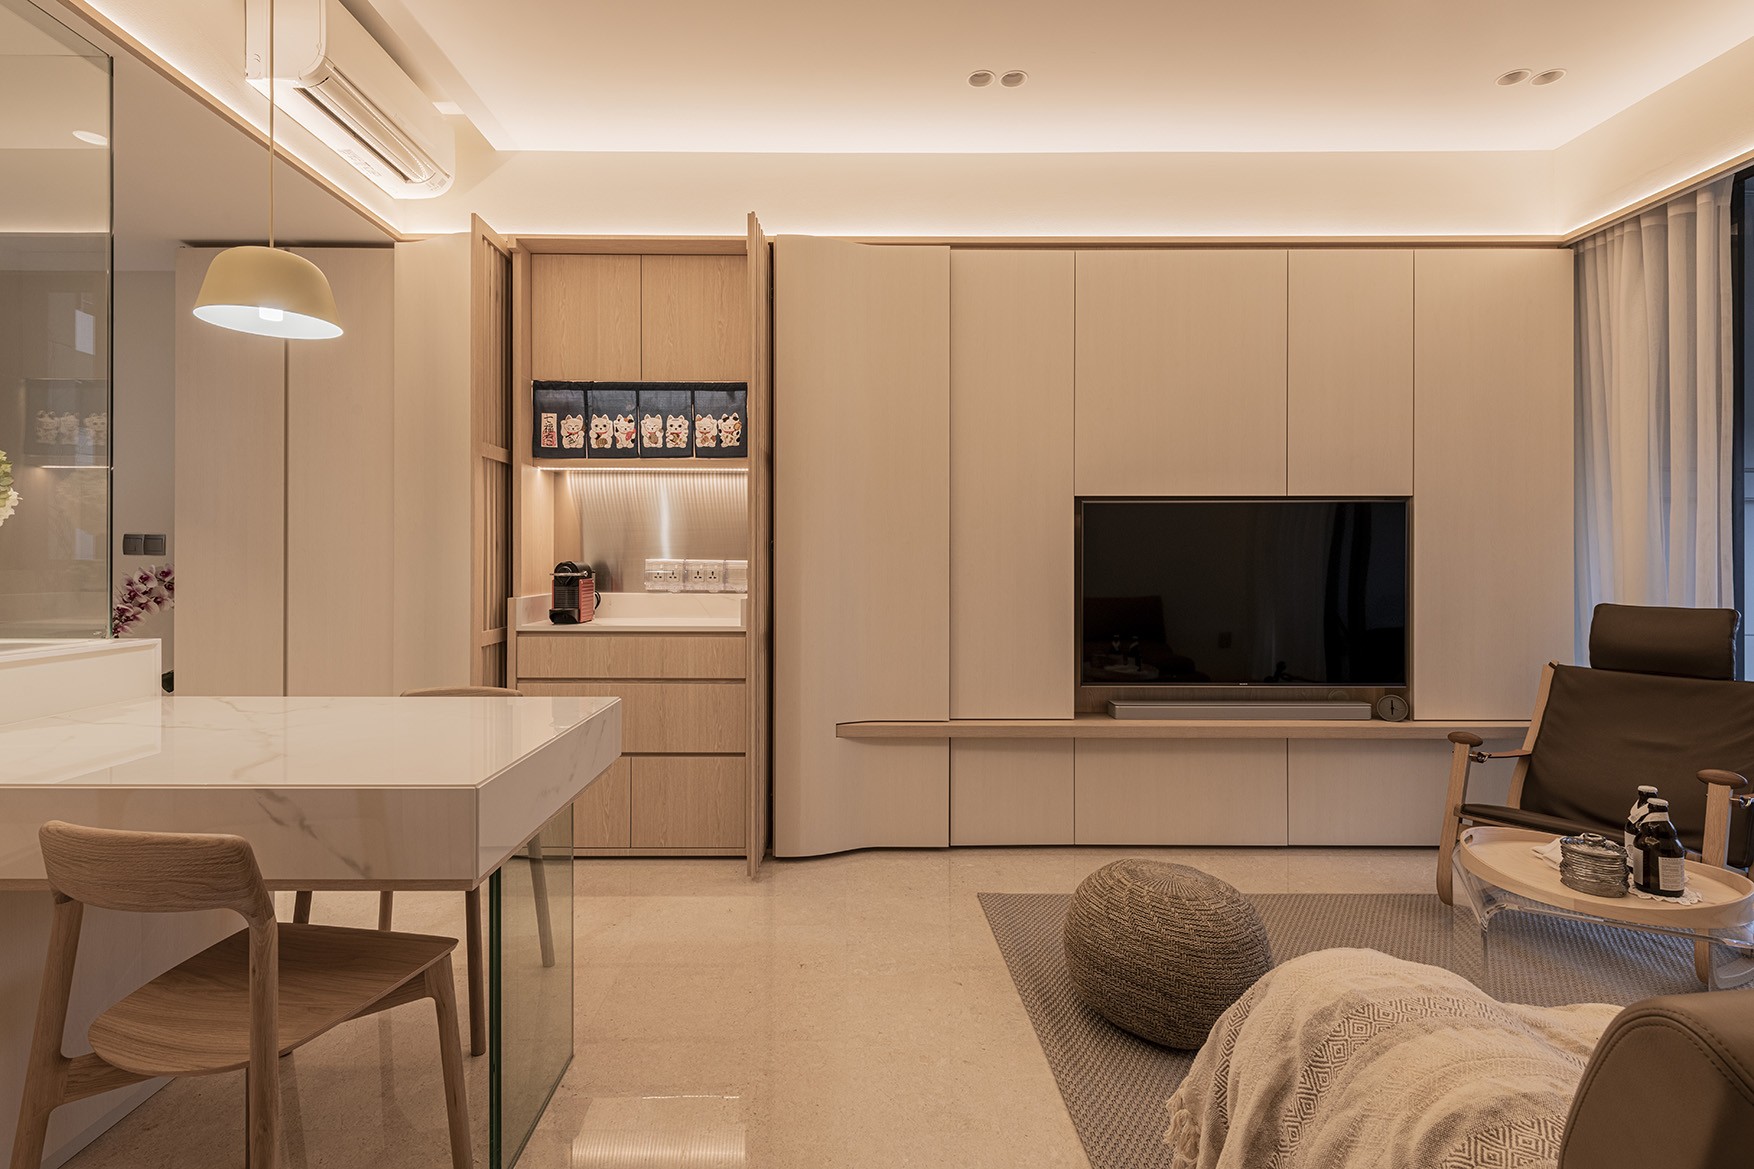 Condo Living Room Design: Comfort And Stylish Simplicity